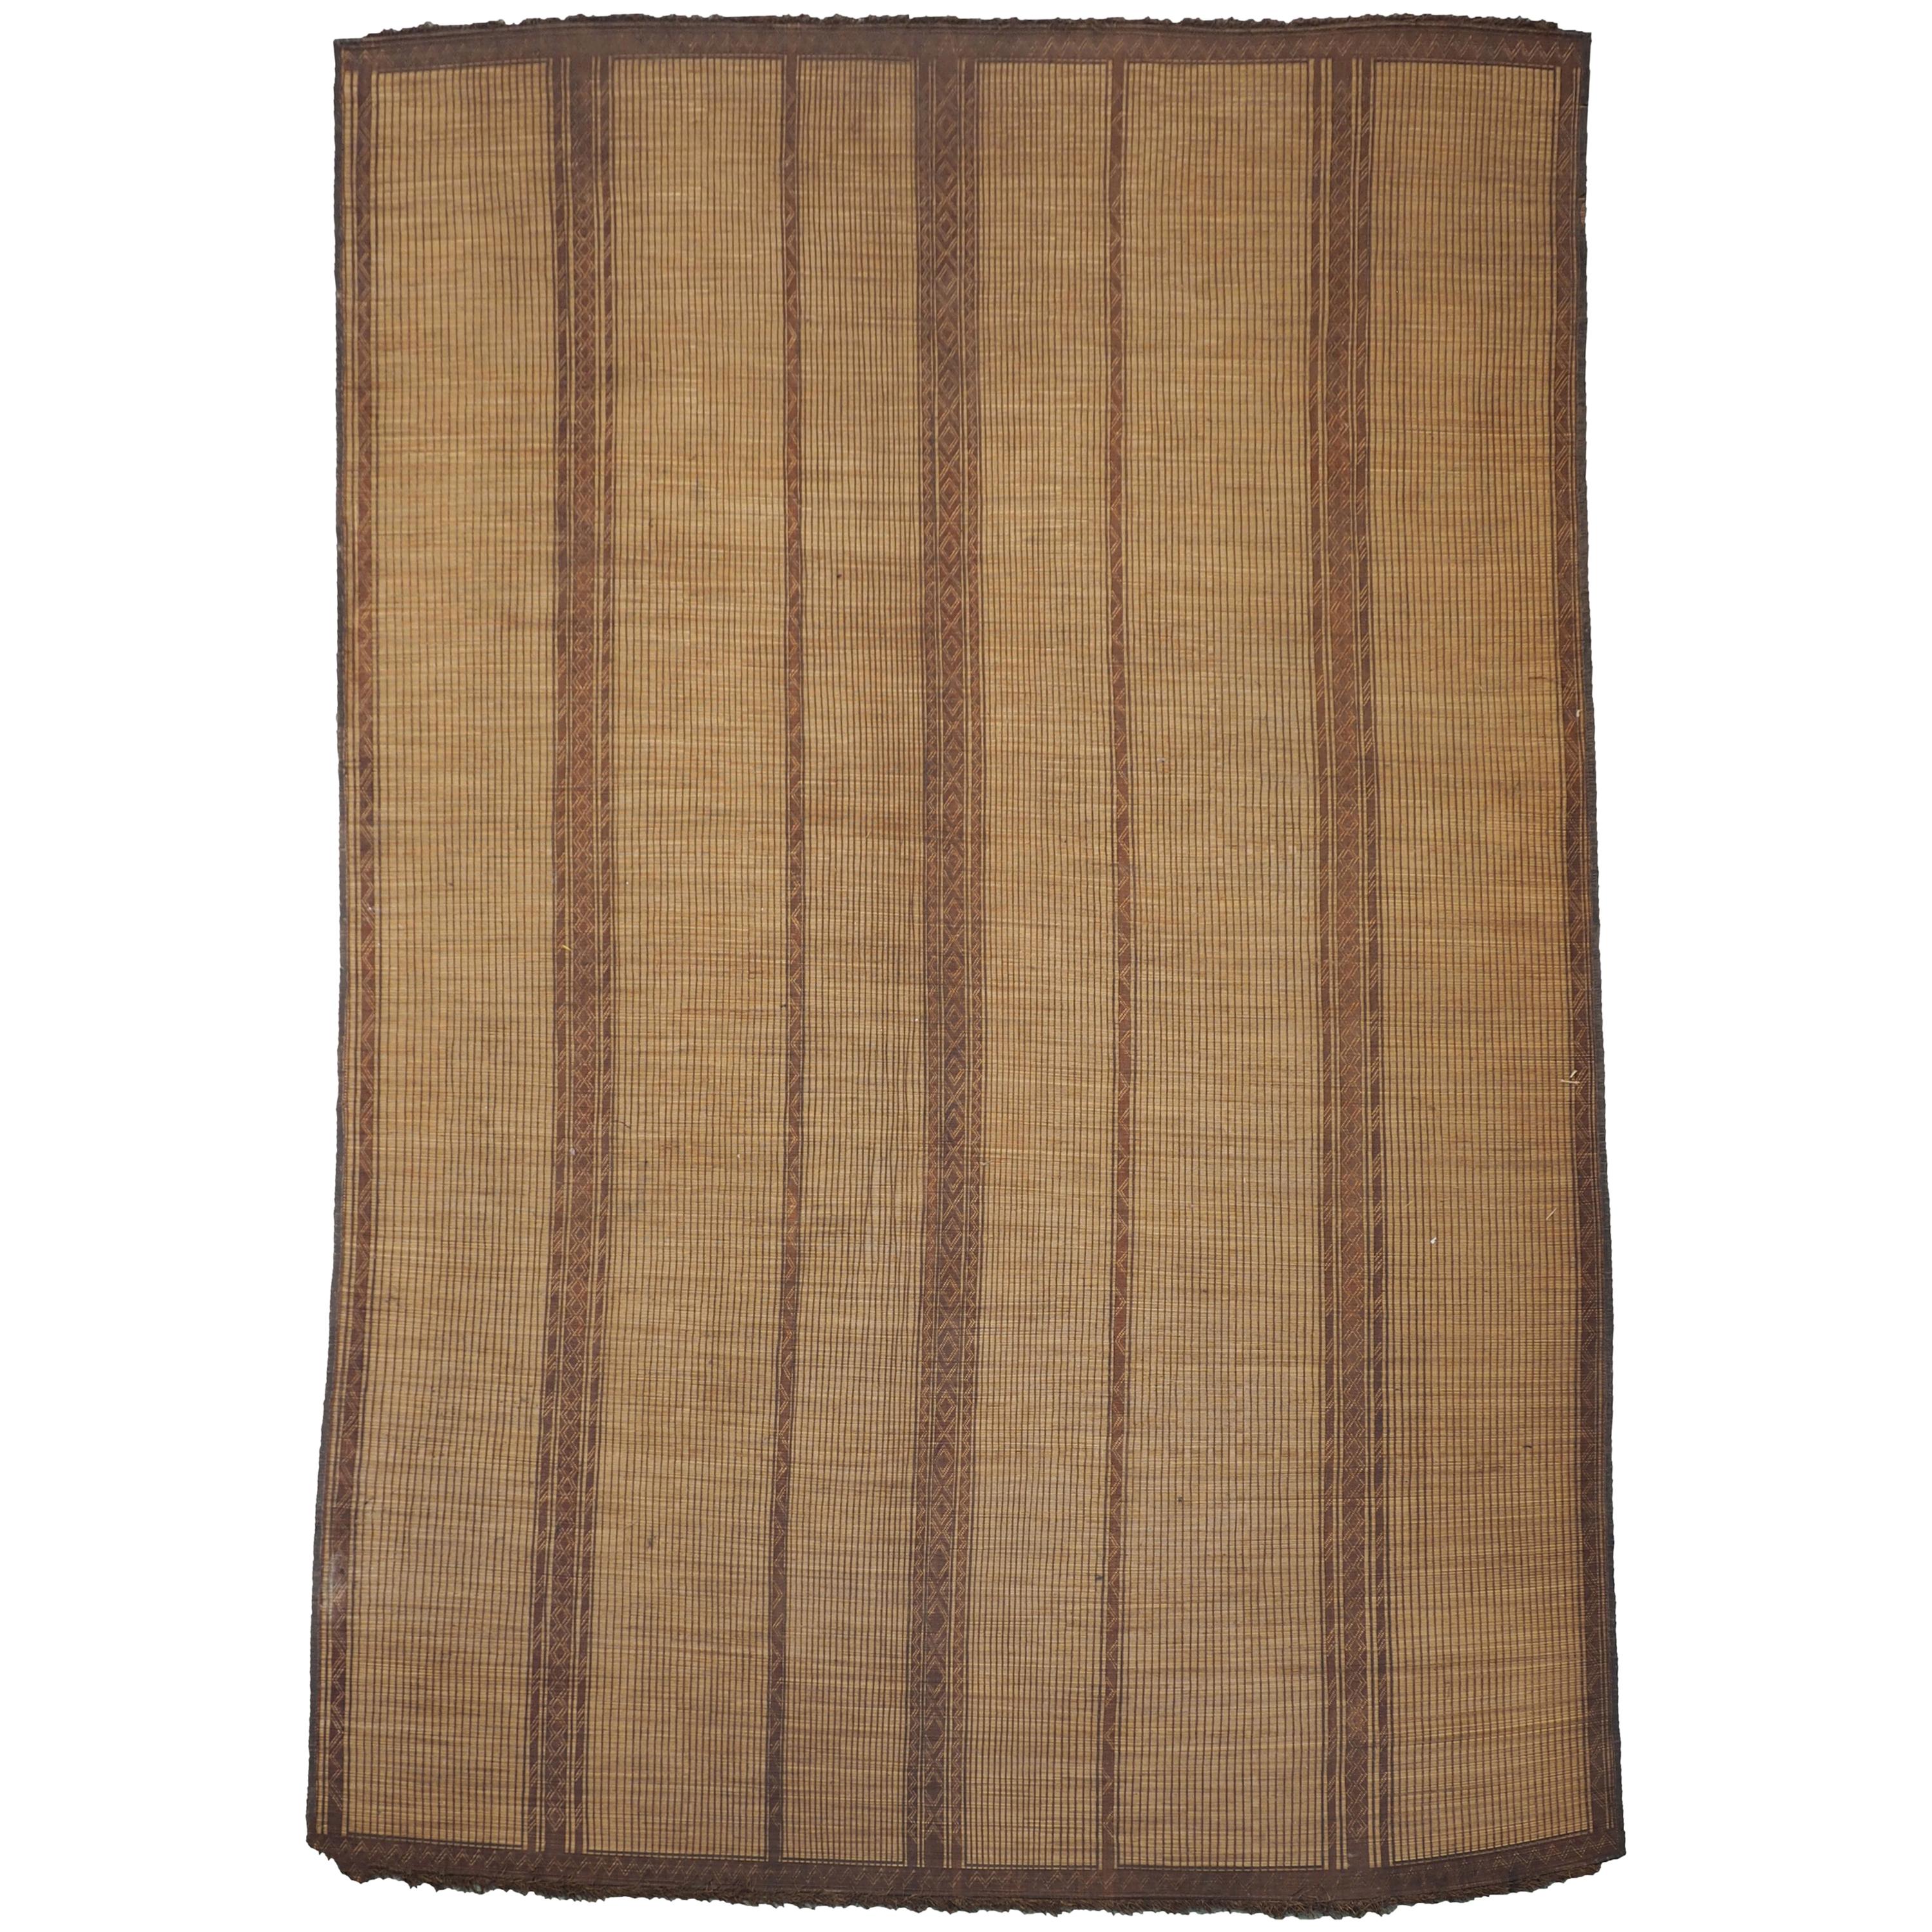 Mauritania Mat aus Sahara aus Leder und Palmenholz, Mid-Century Modern Design im Angebot